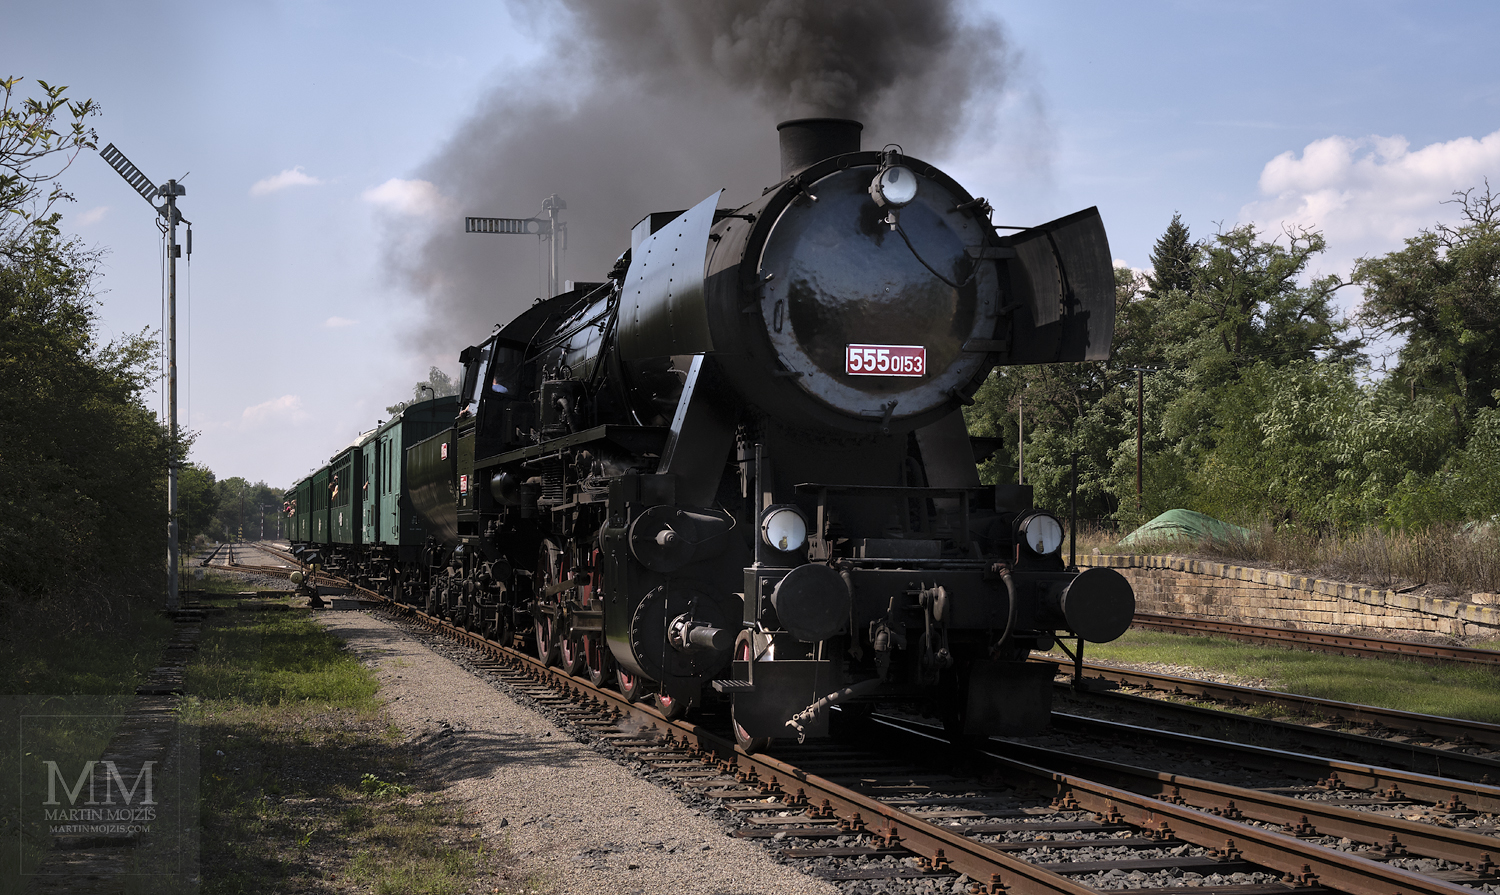 Fine Art photograph of the steam locomotive. Martin Mojzis.